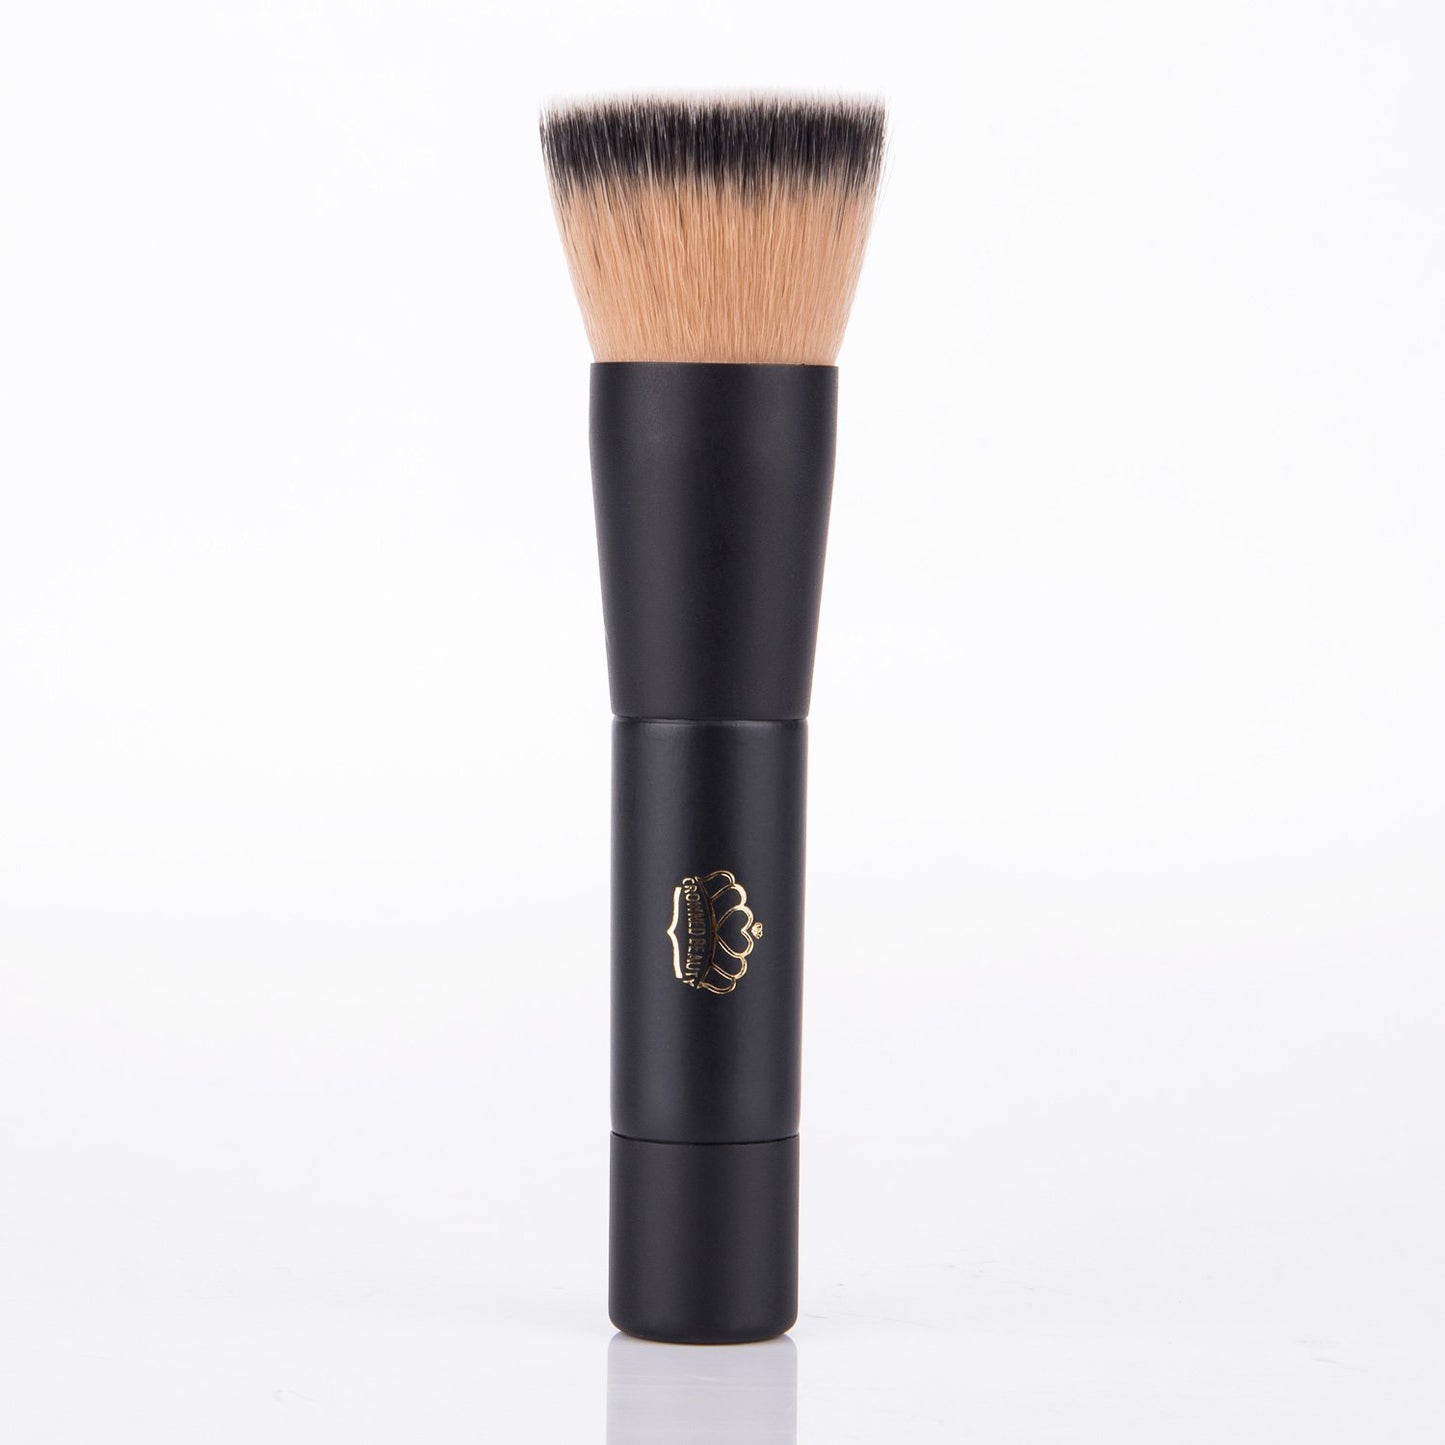 Crowned Beauty F02 Flat Kabuki Brush, Foundation Brush & Professional Grade Makeup Brush to Blend Liquid & Cream Products